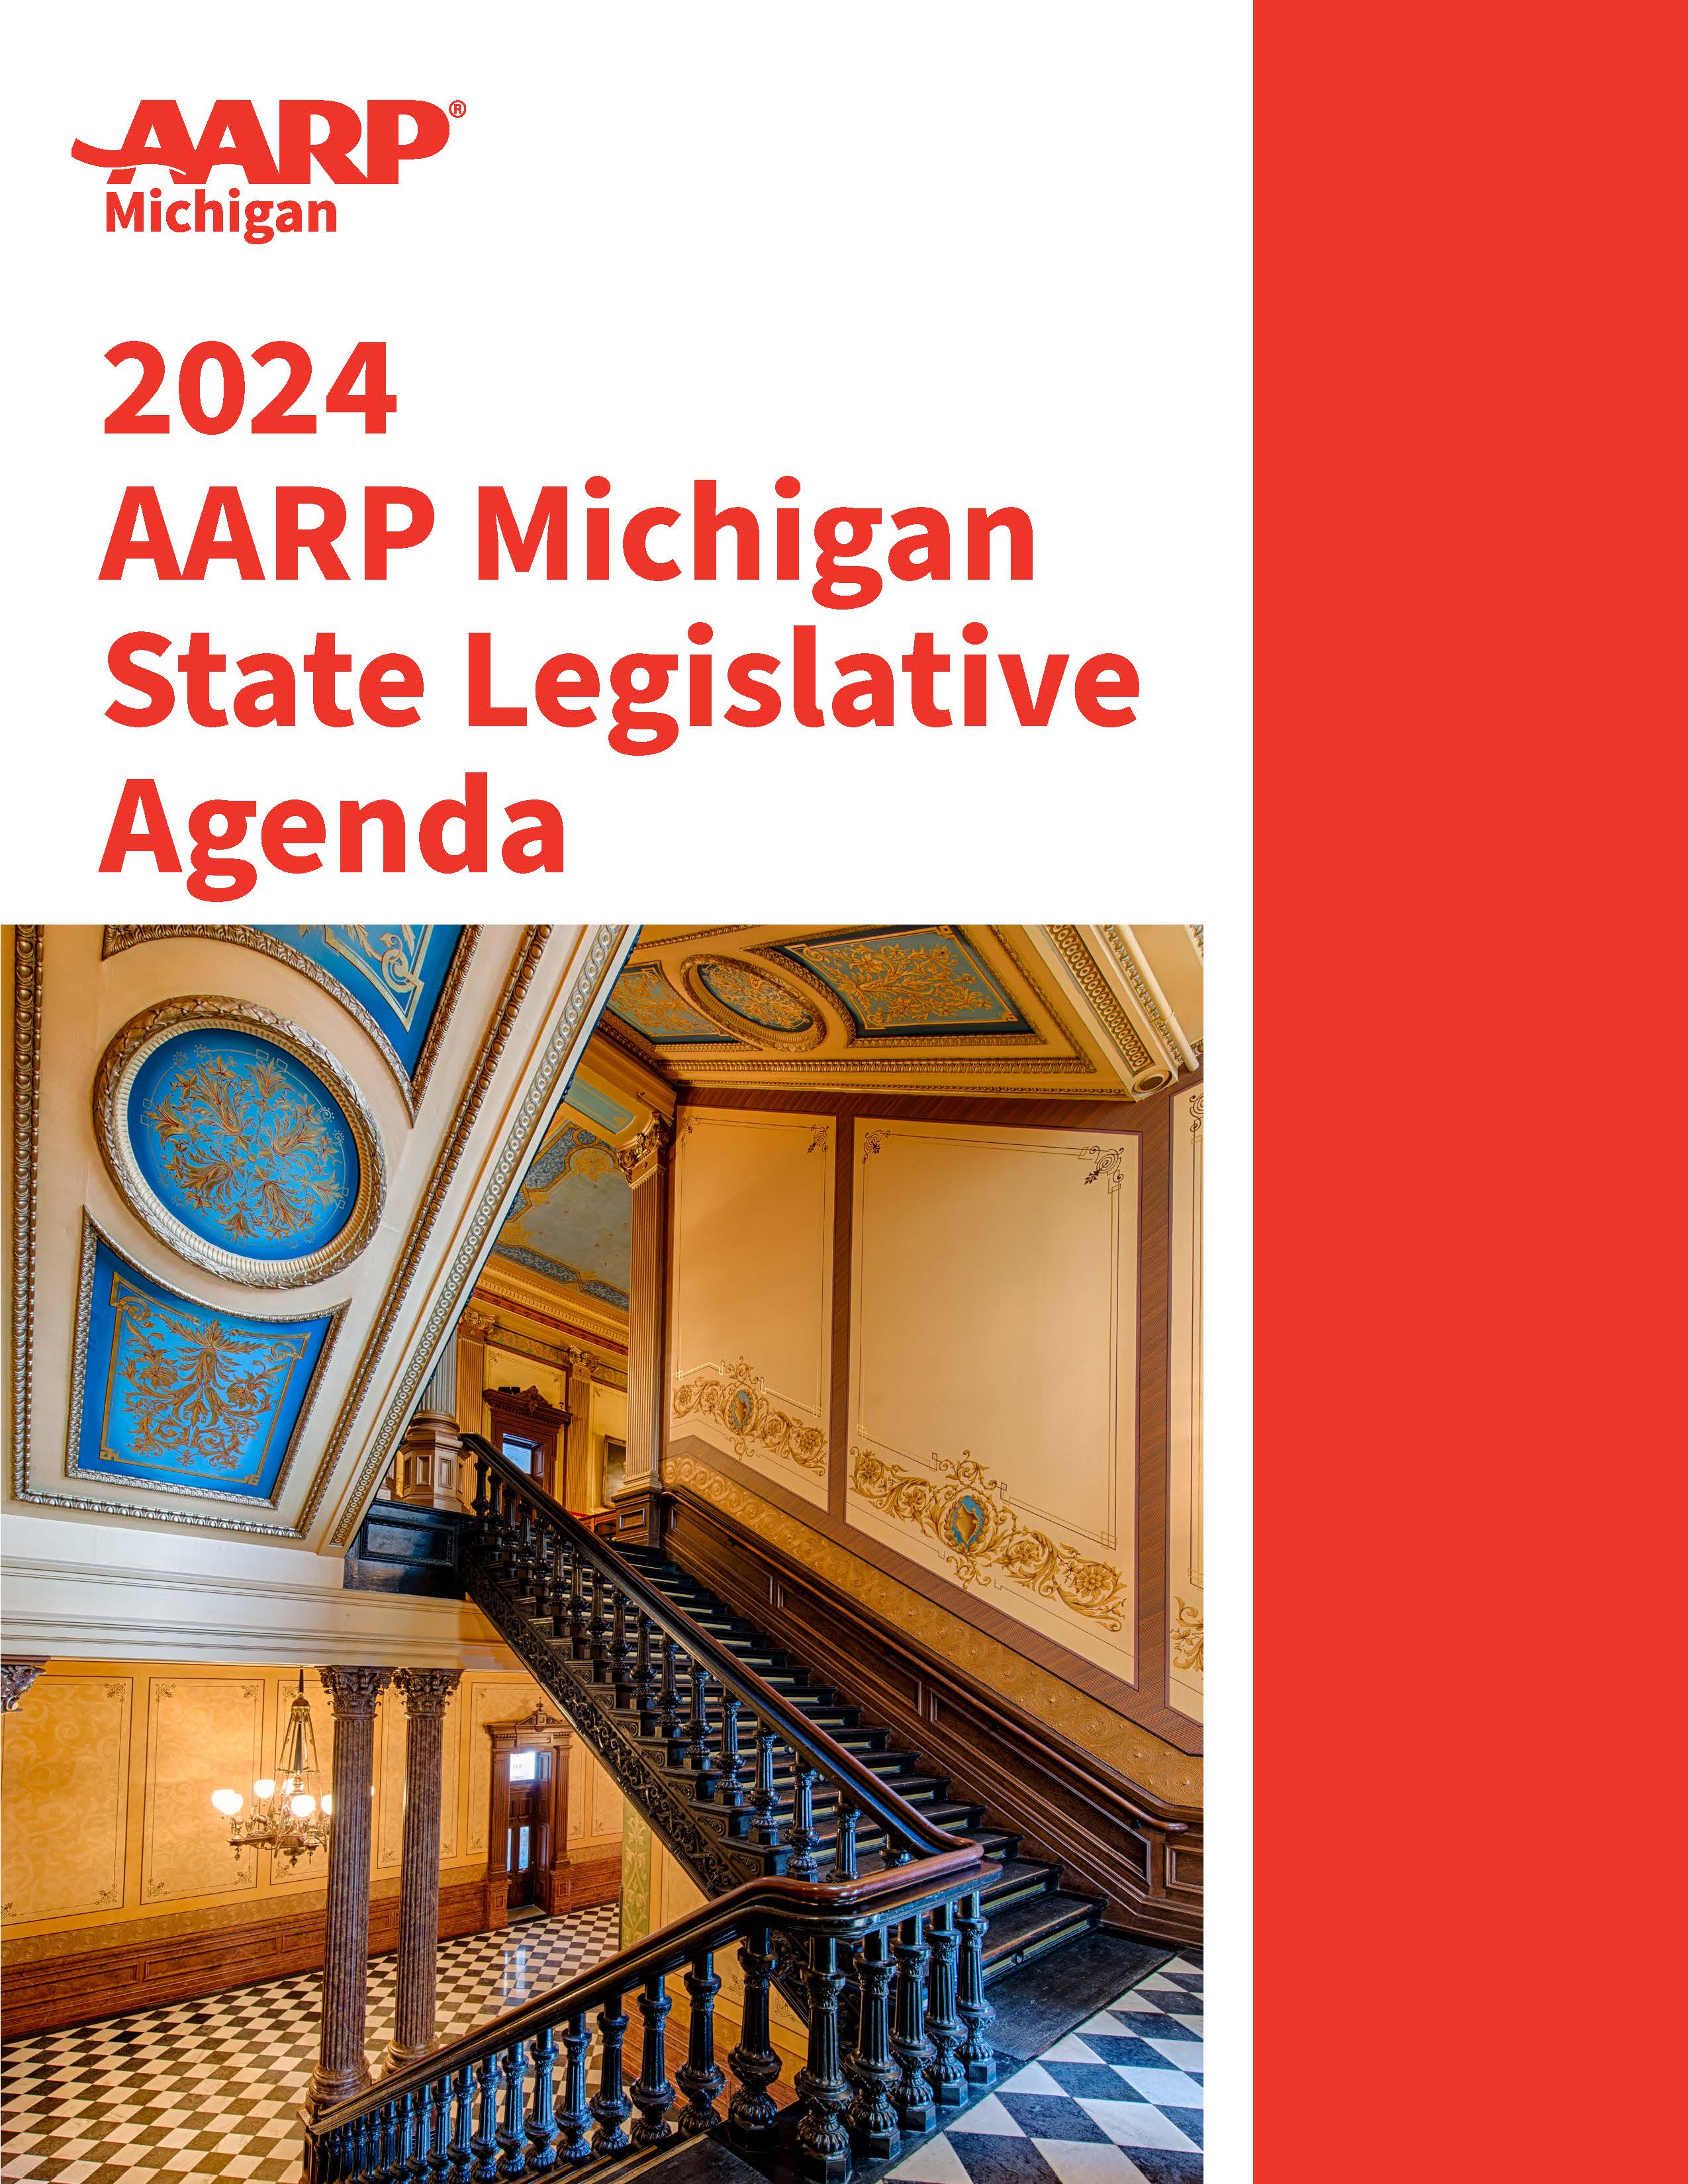 Share AARP's 2024 State Legislative Priorities AARP